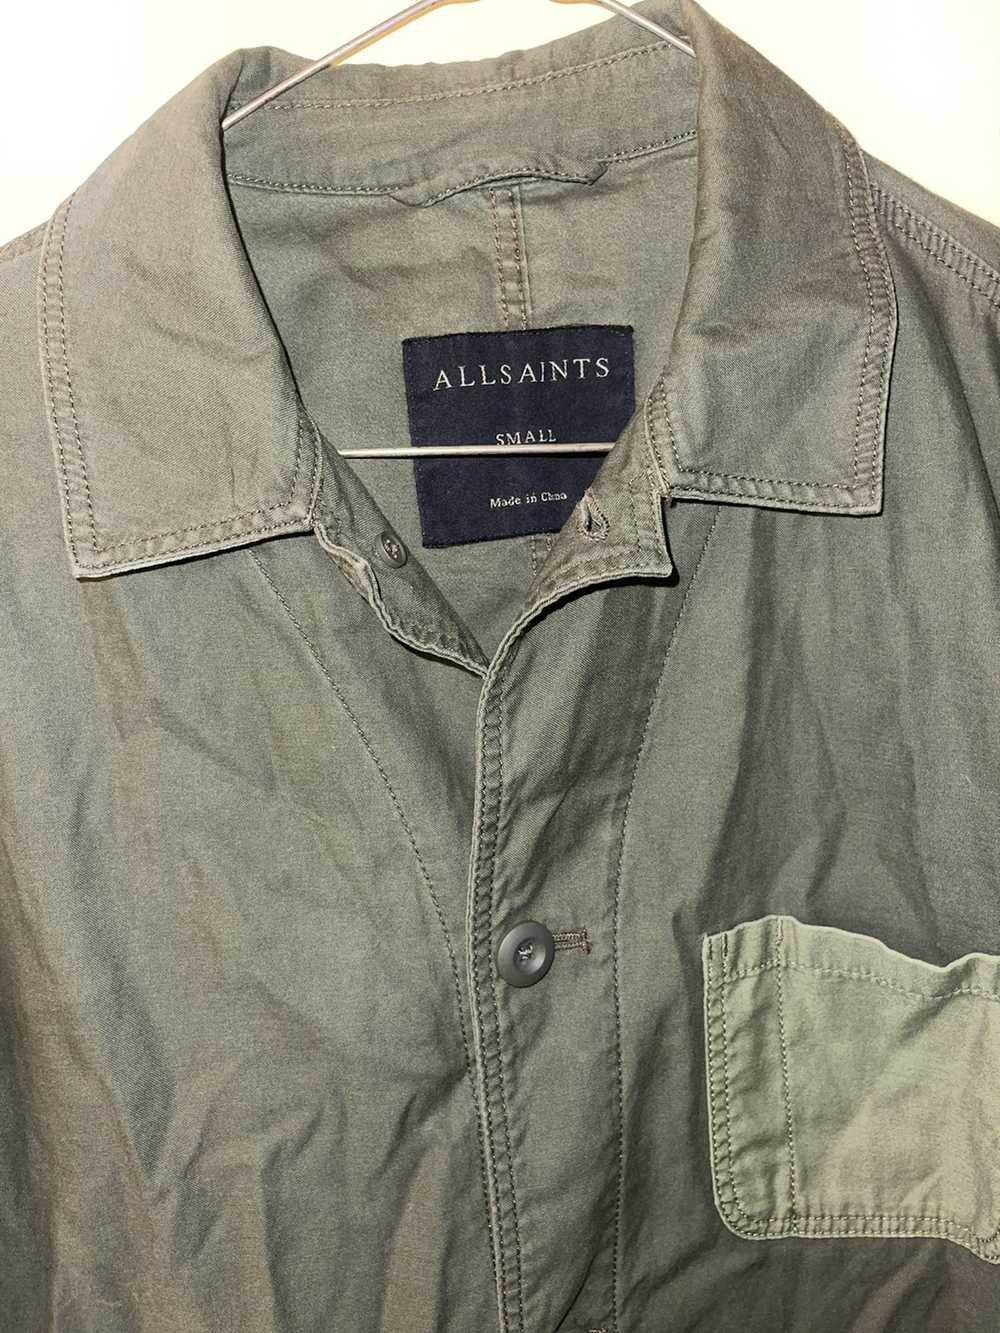 Allsaints AllSaints Men’s Sierra Jacket, Small - image 2